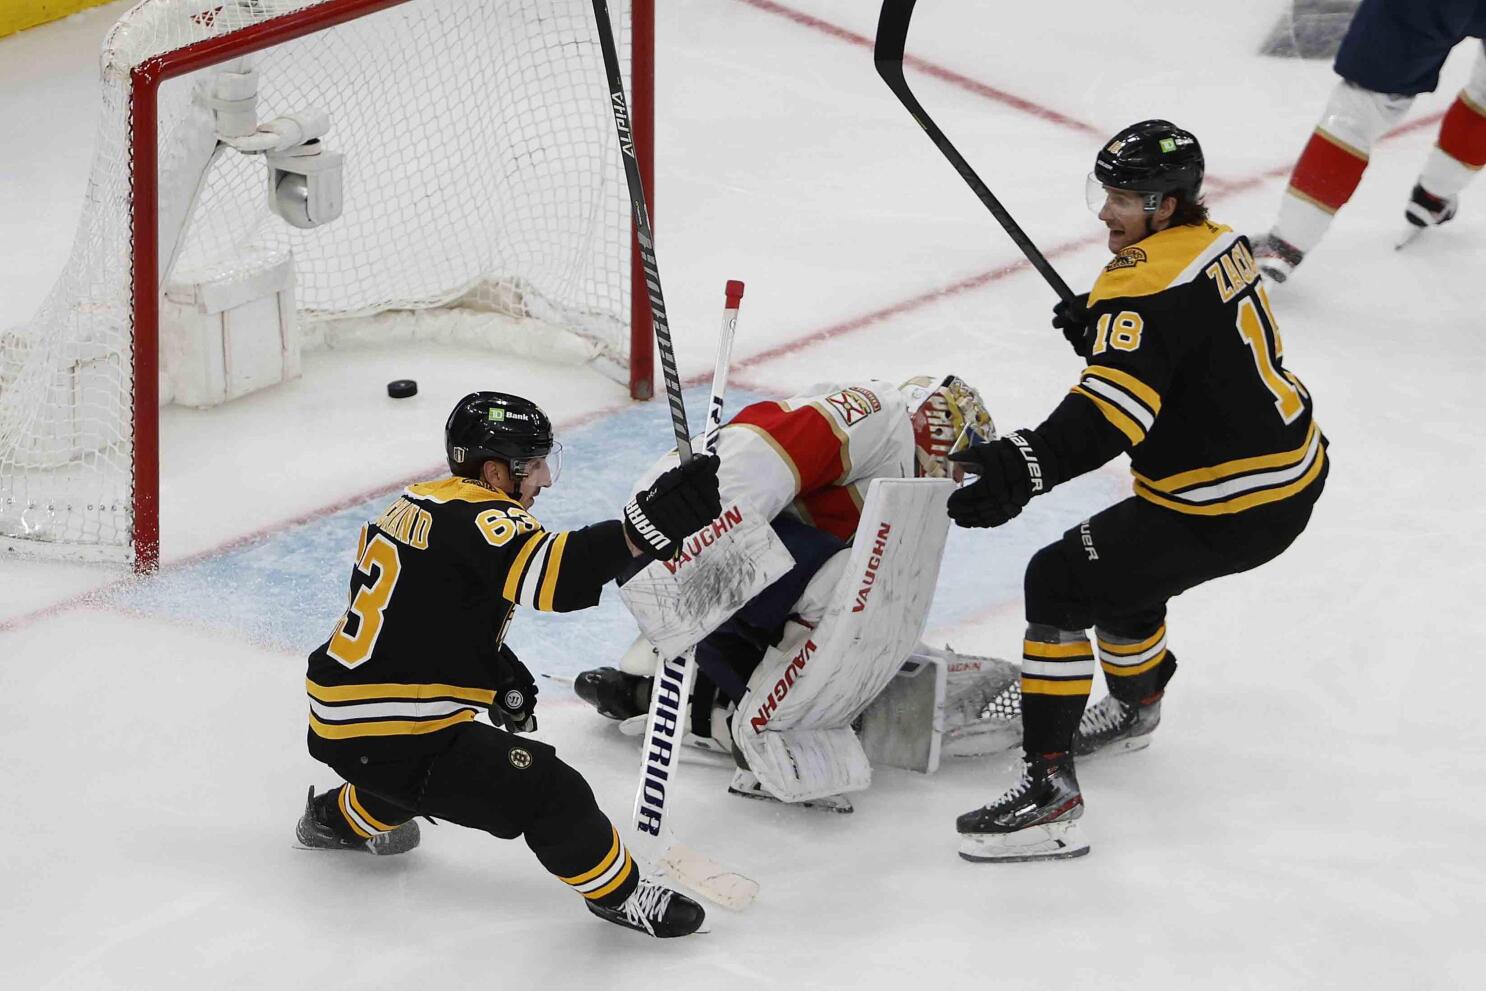 Matt Grzelcyk returns to Bruins lineup against Ducks - The Boston Globe